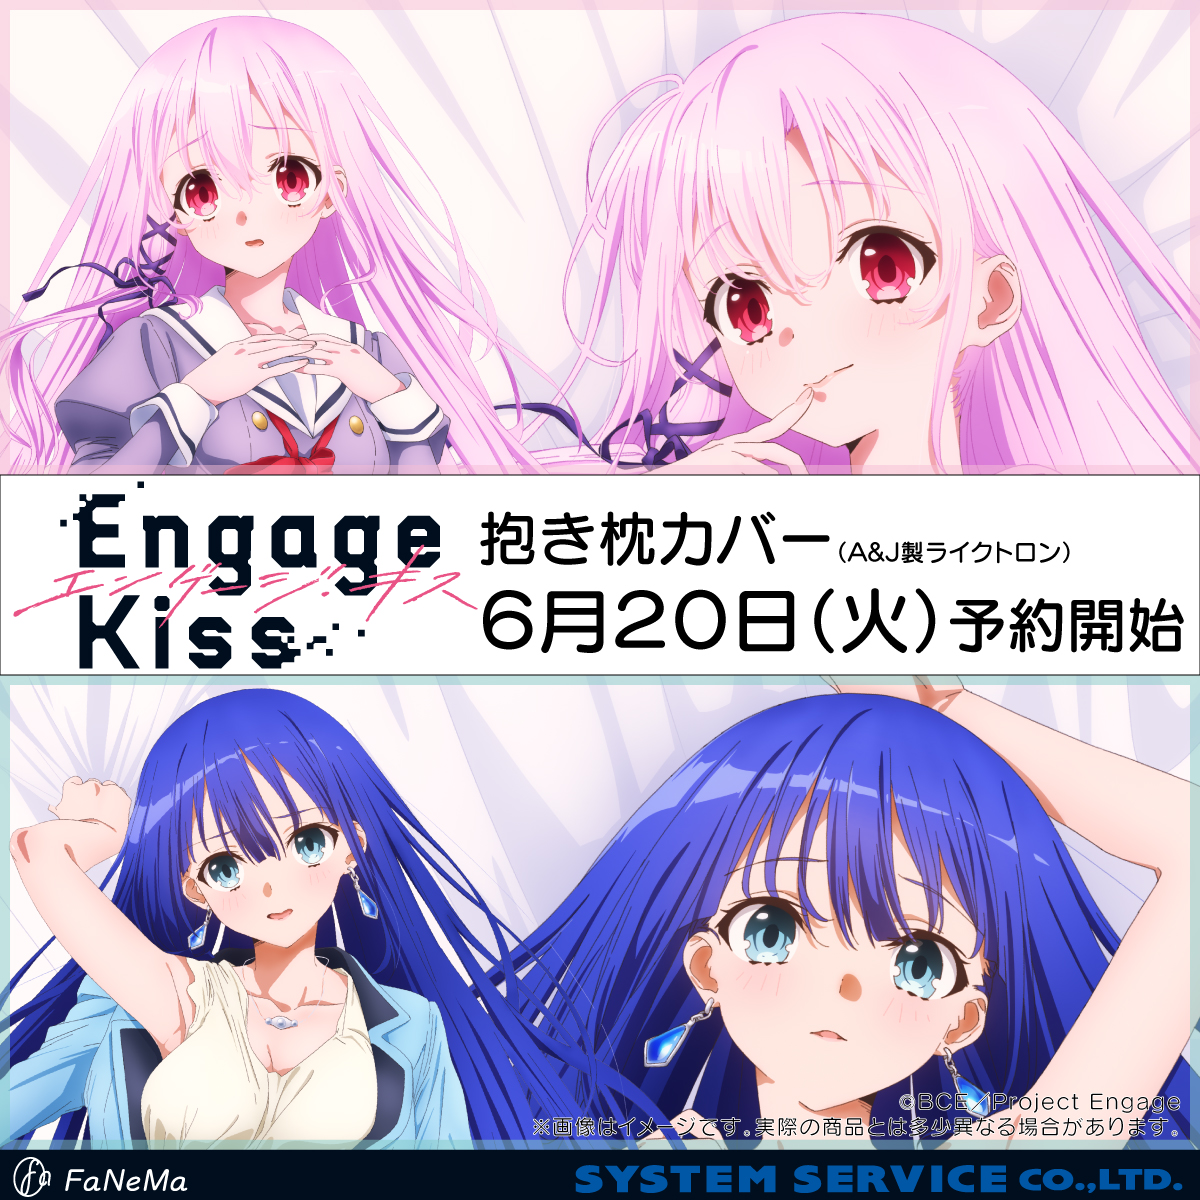 Engage Kiss エンゲージキス fanema 限定 抱き枕カバー キサラ